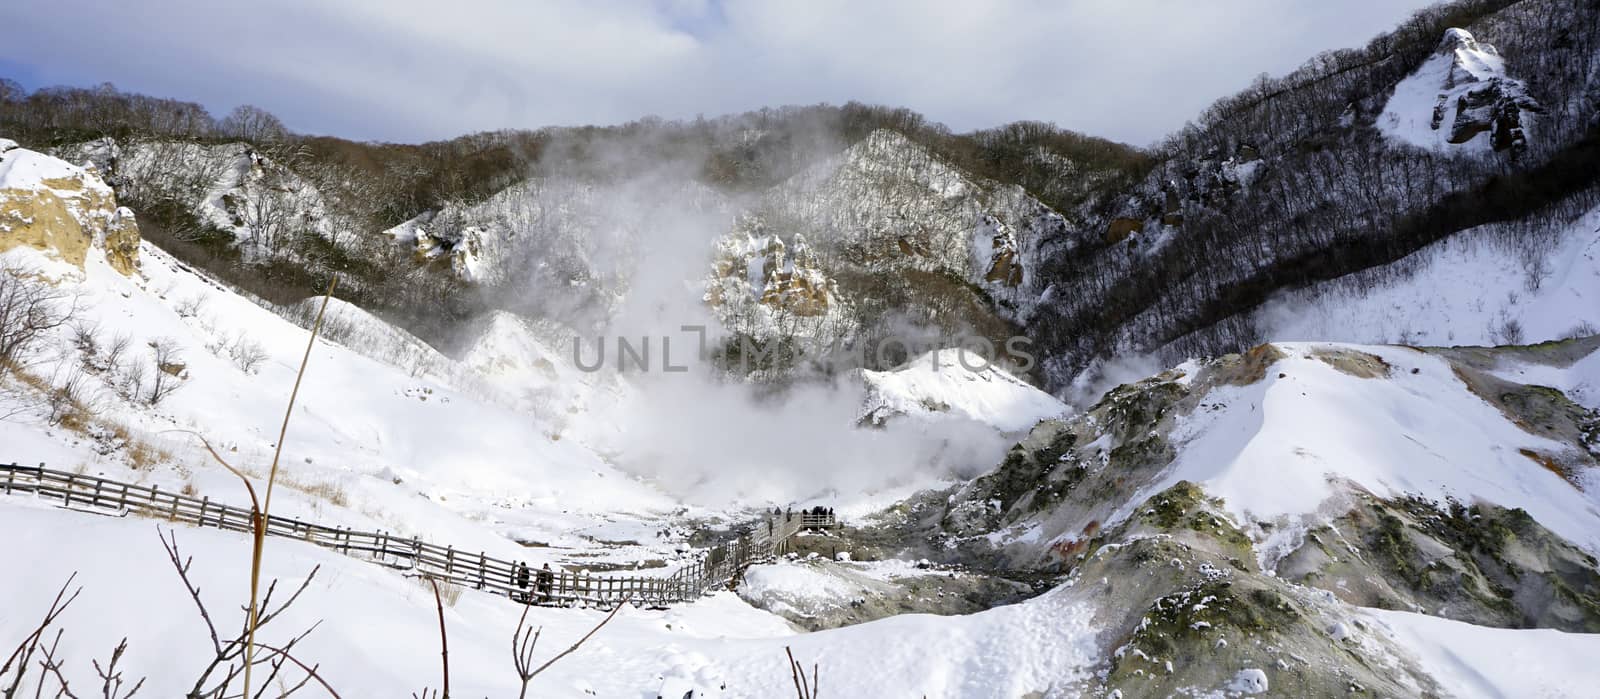 Noboribetsu onsen hell valley and bridge snow winter landscape national park in Jigokudani, Hokkaido, Japan